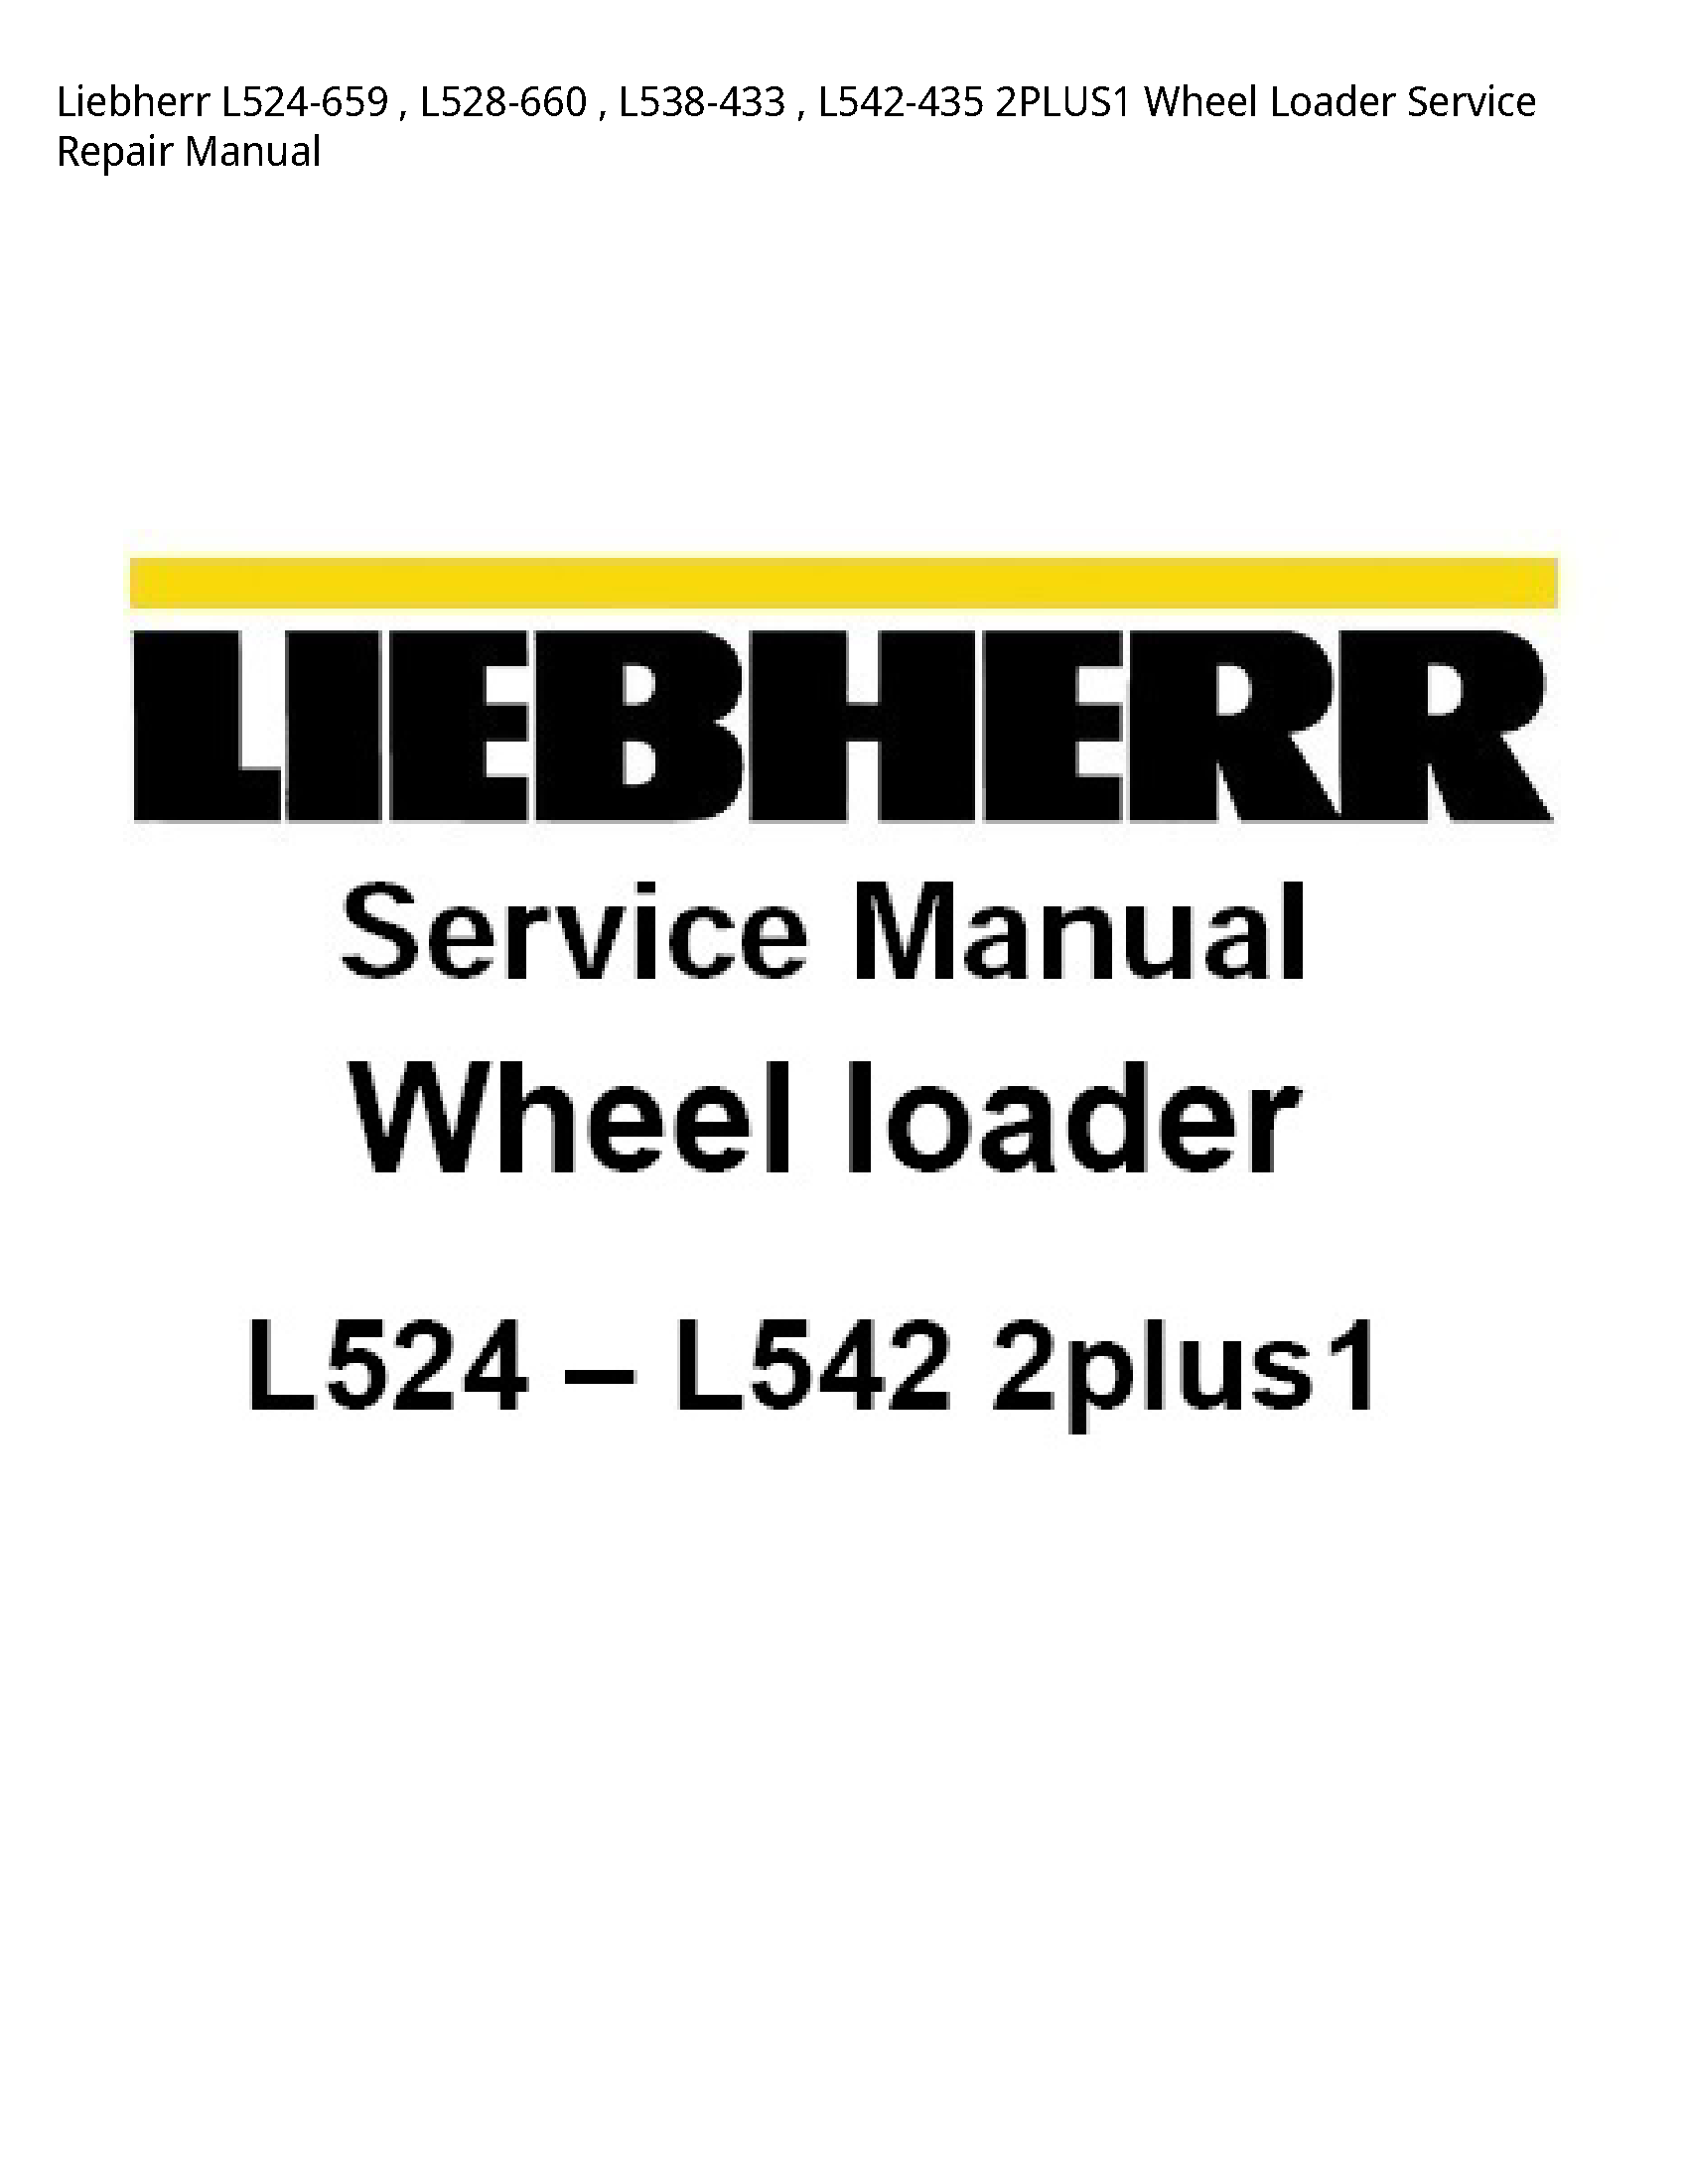 Liebherr L524-659 Wheel Loader manual